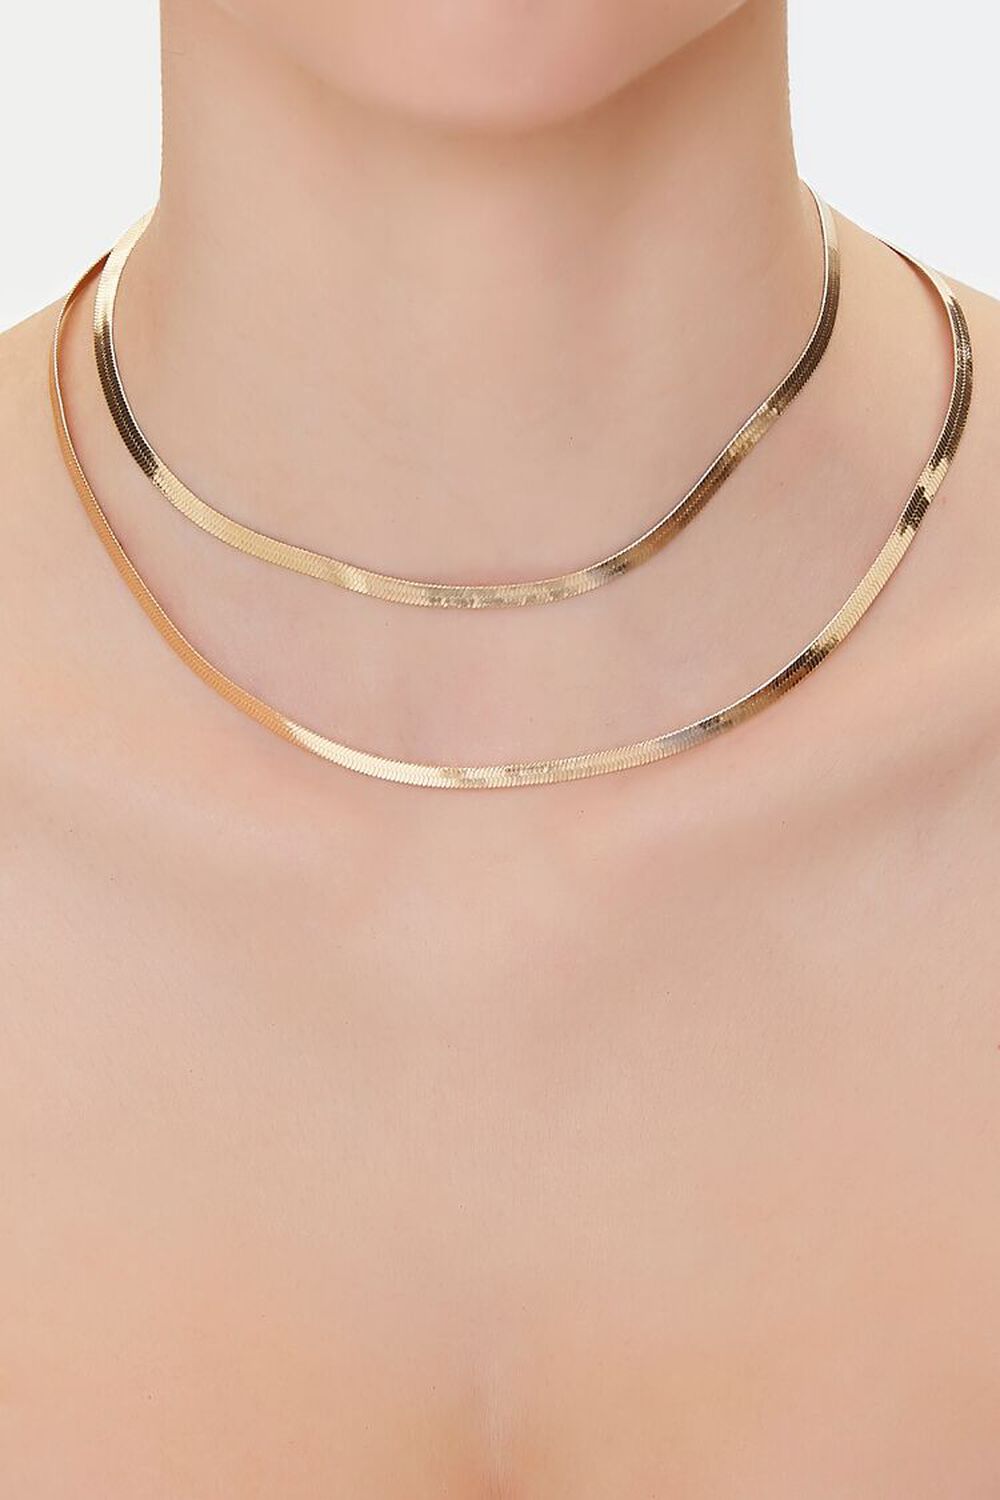 GOLD Omega Chain Necklace Set, image 1